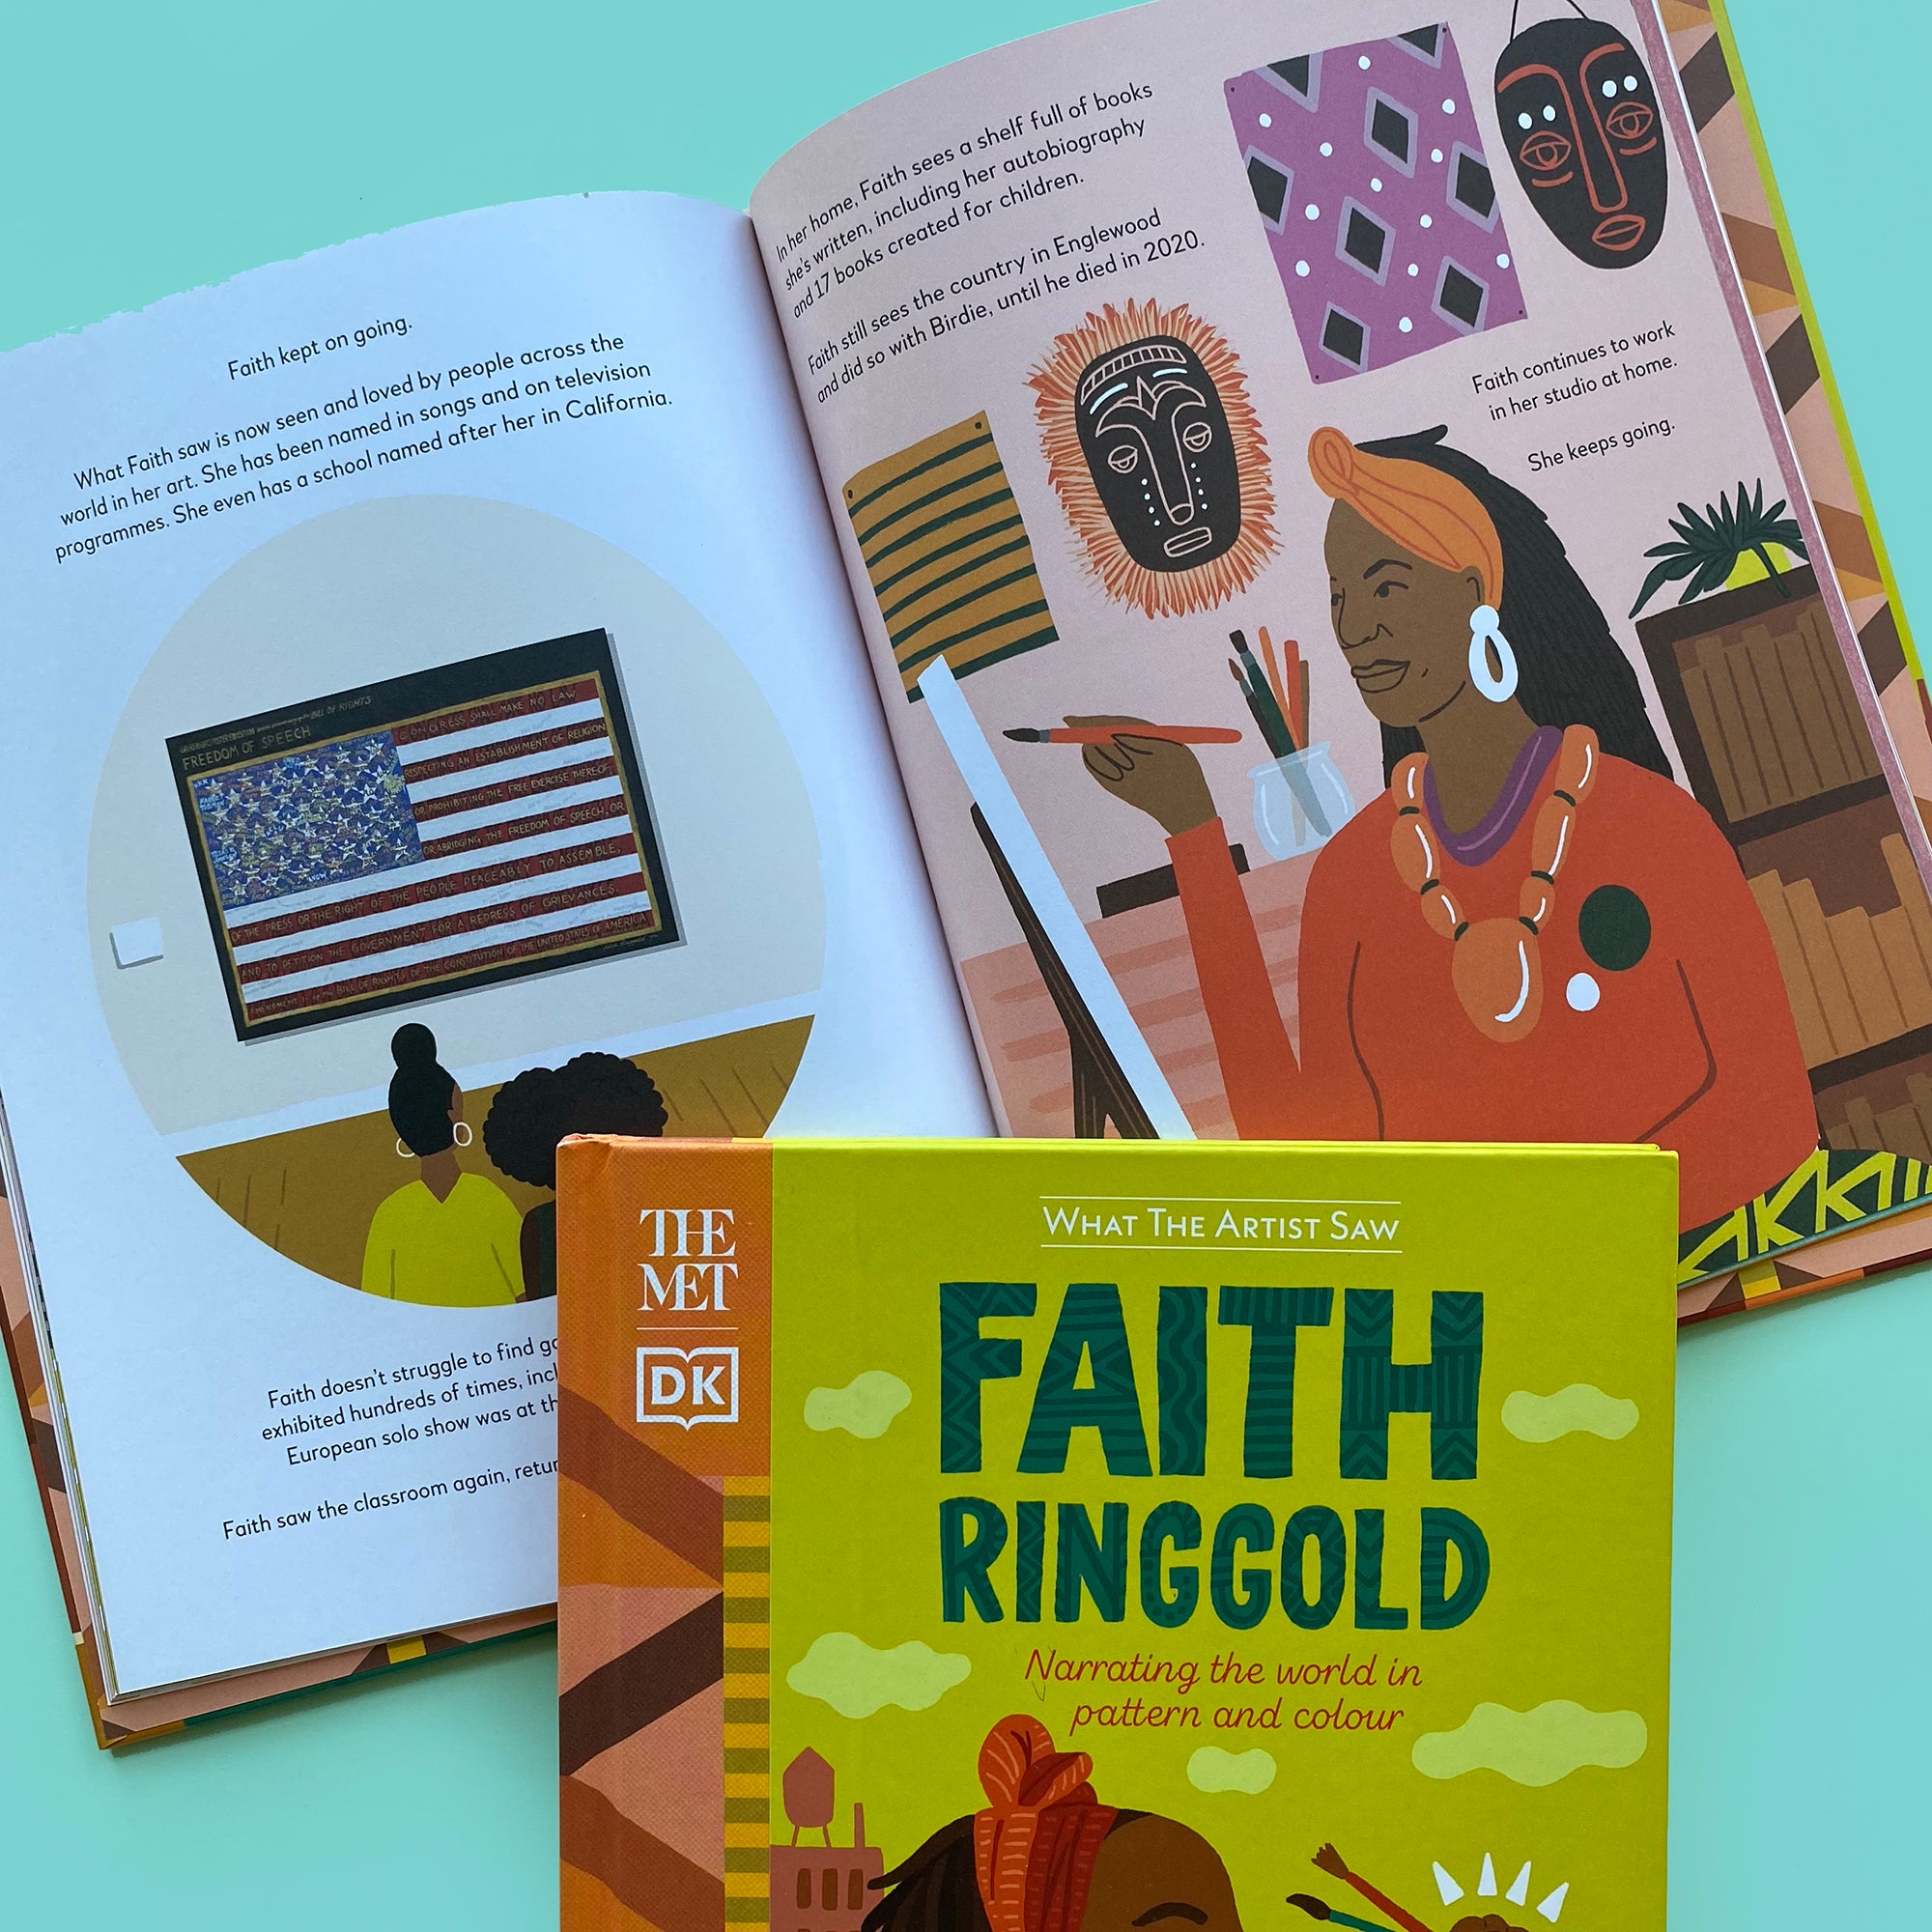 The MET - Faith Ringgold